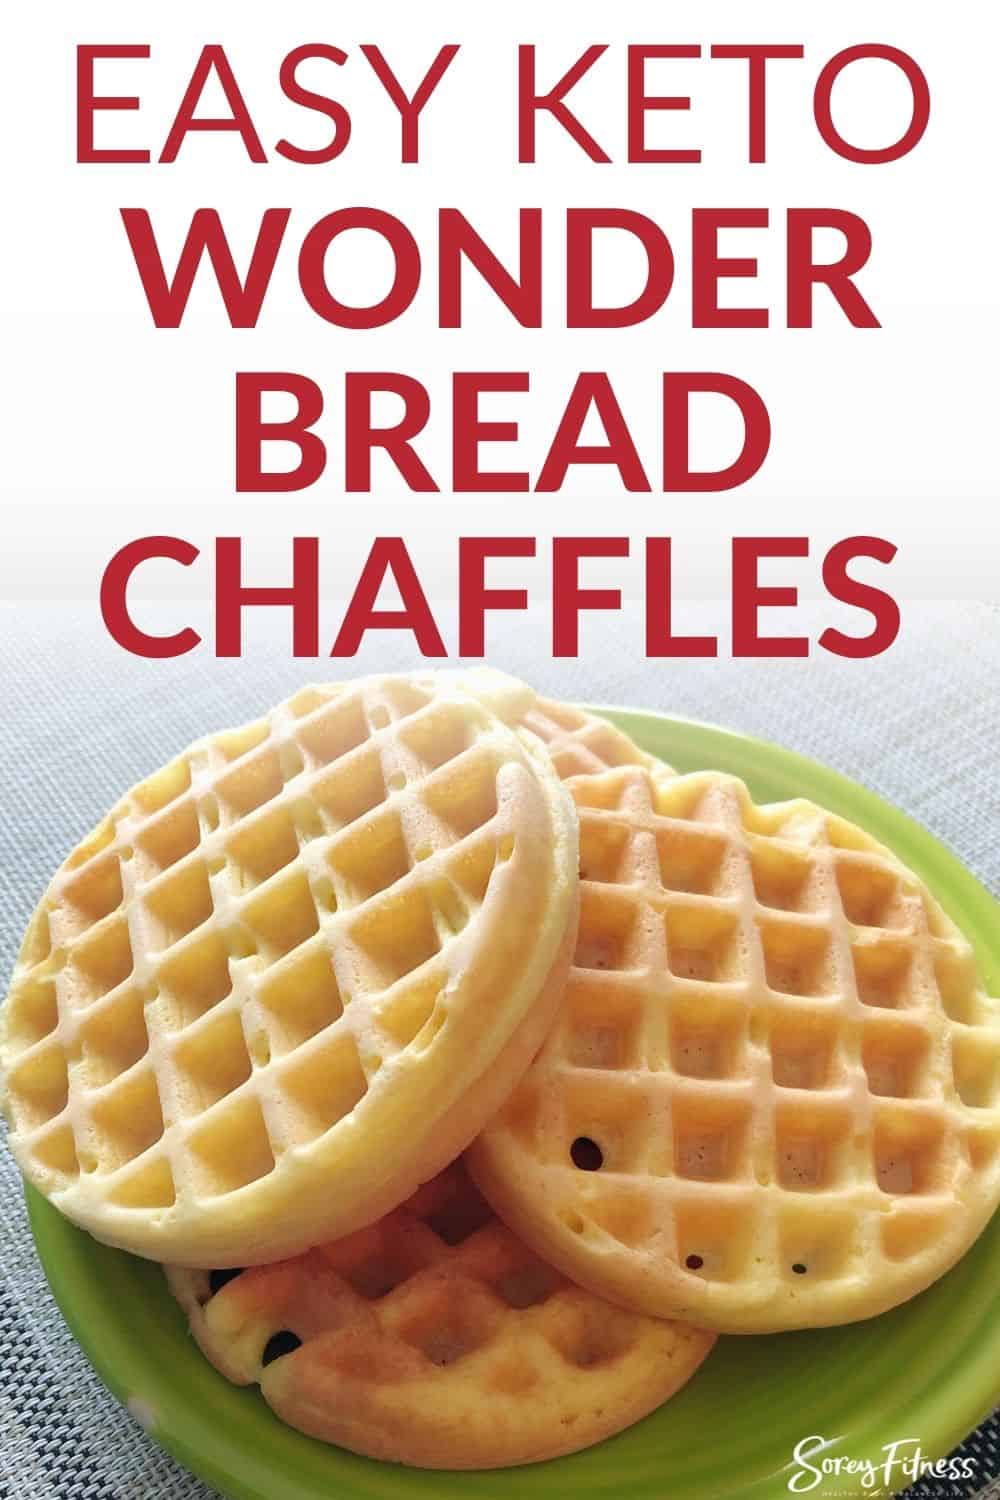 Wonder Bread Chaffle - SeriousKeto